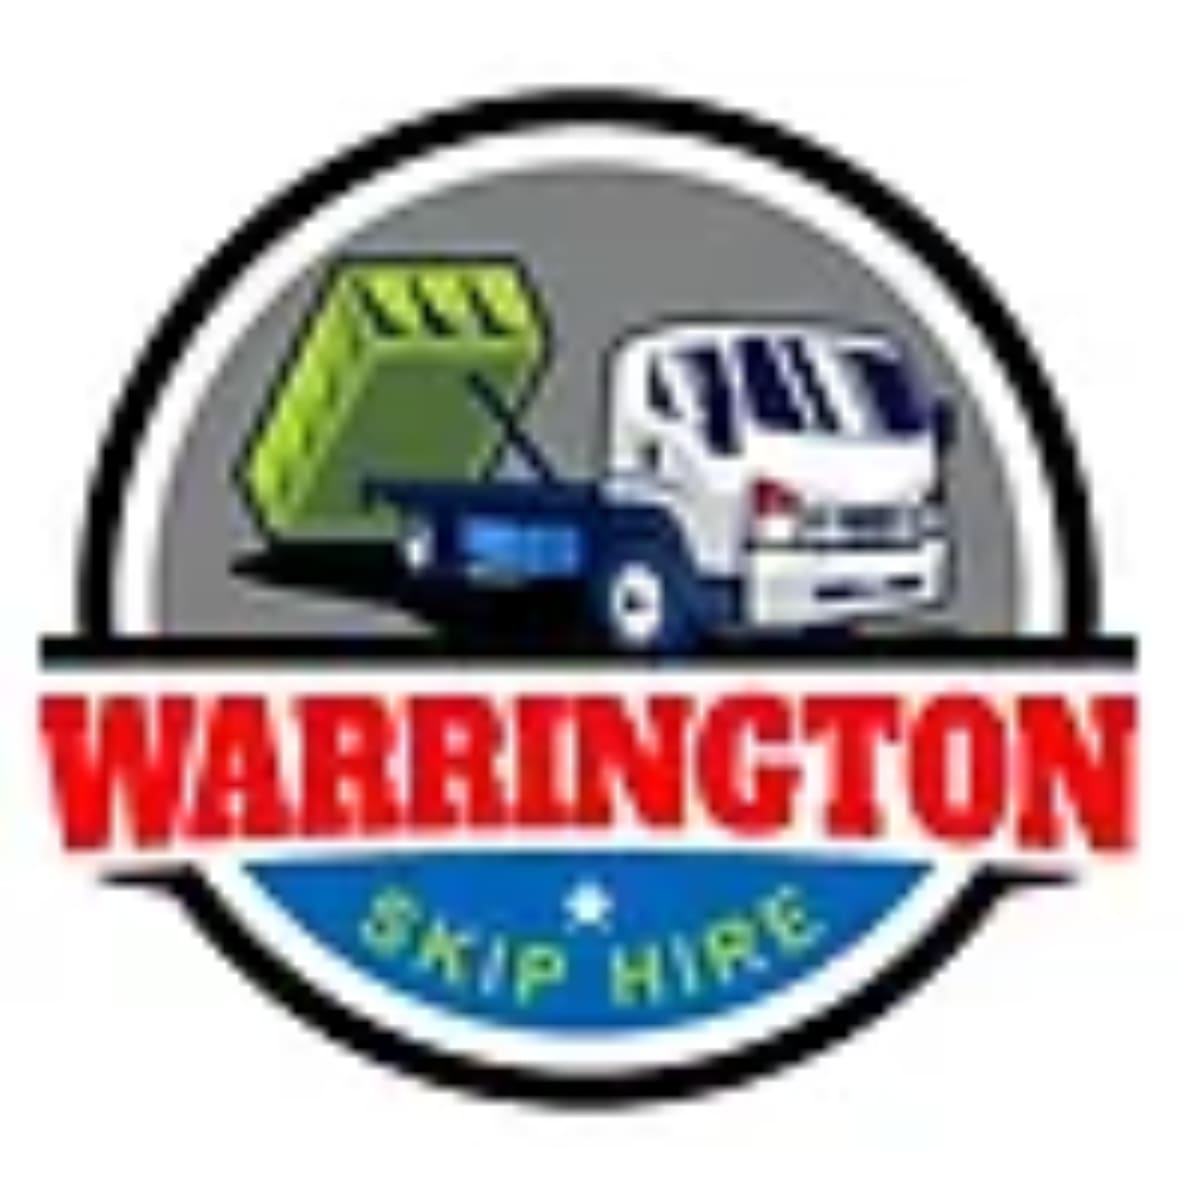 Warrington Skip Hire Ltd - Warrington, Cheshire - 01925 967271 | ShowMeLocal.com